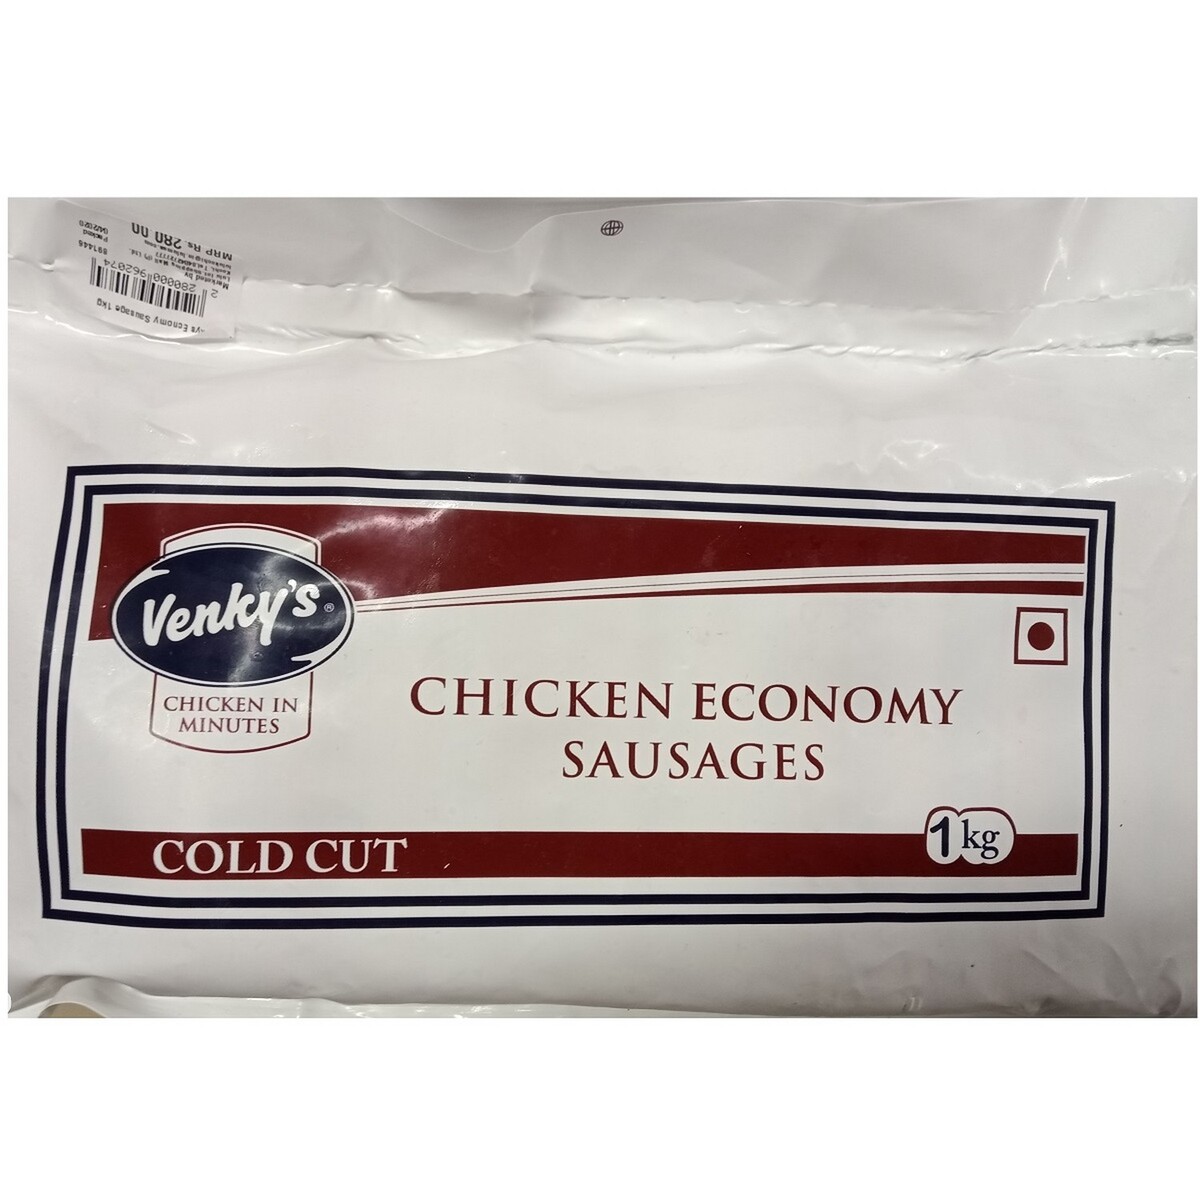 Venkys Ecnomy Sausage 1kg